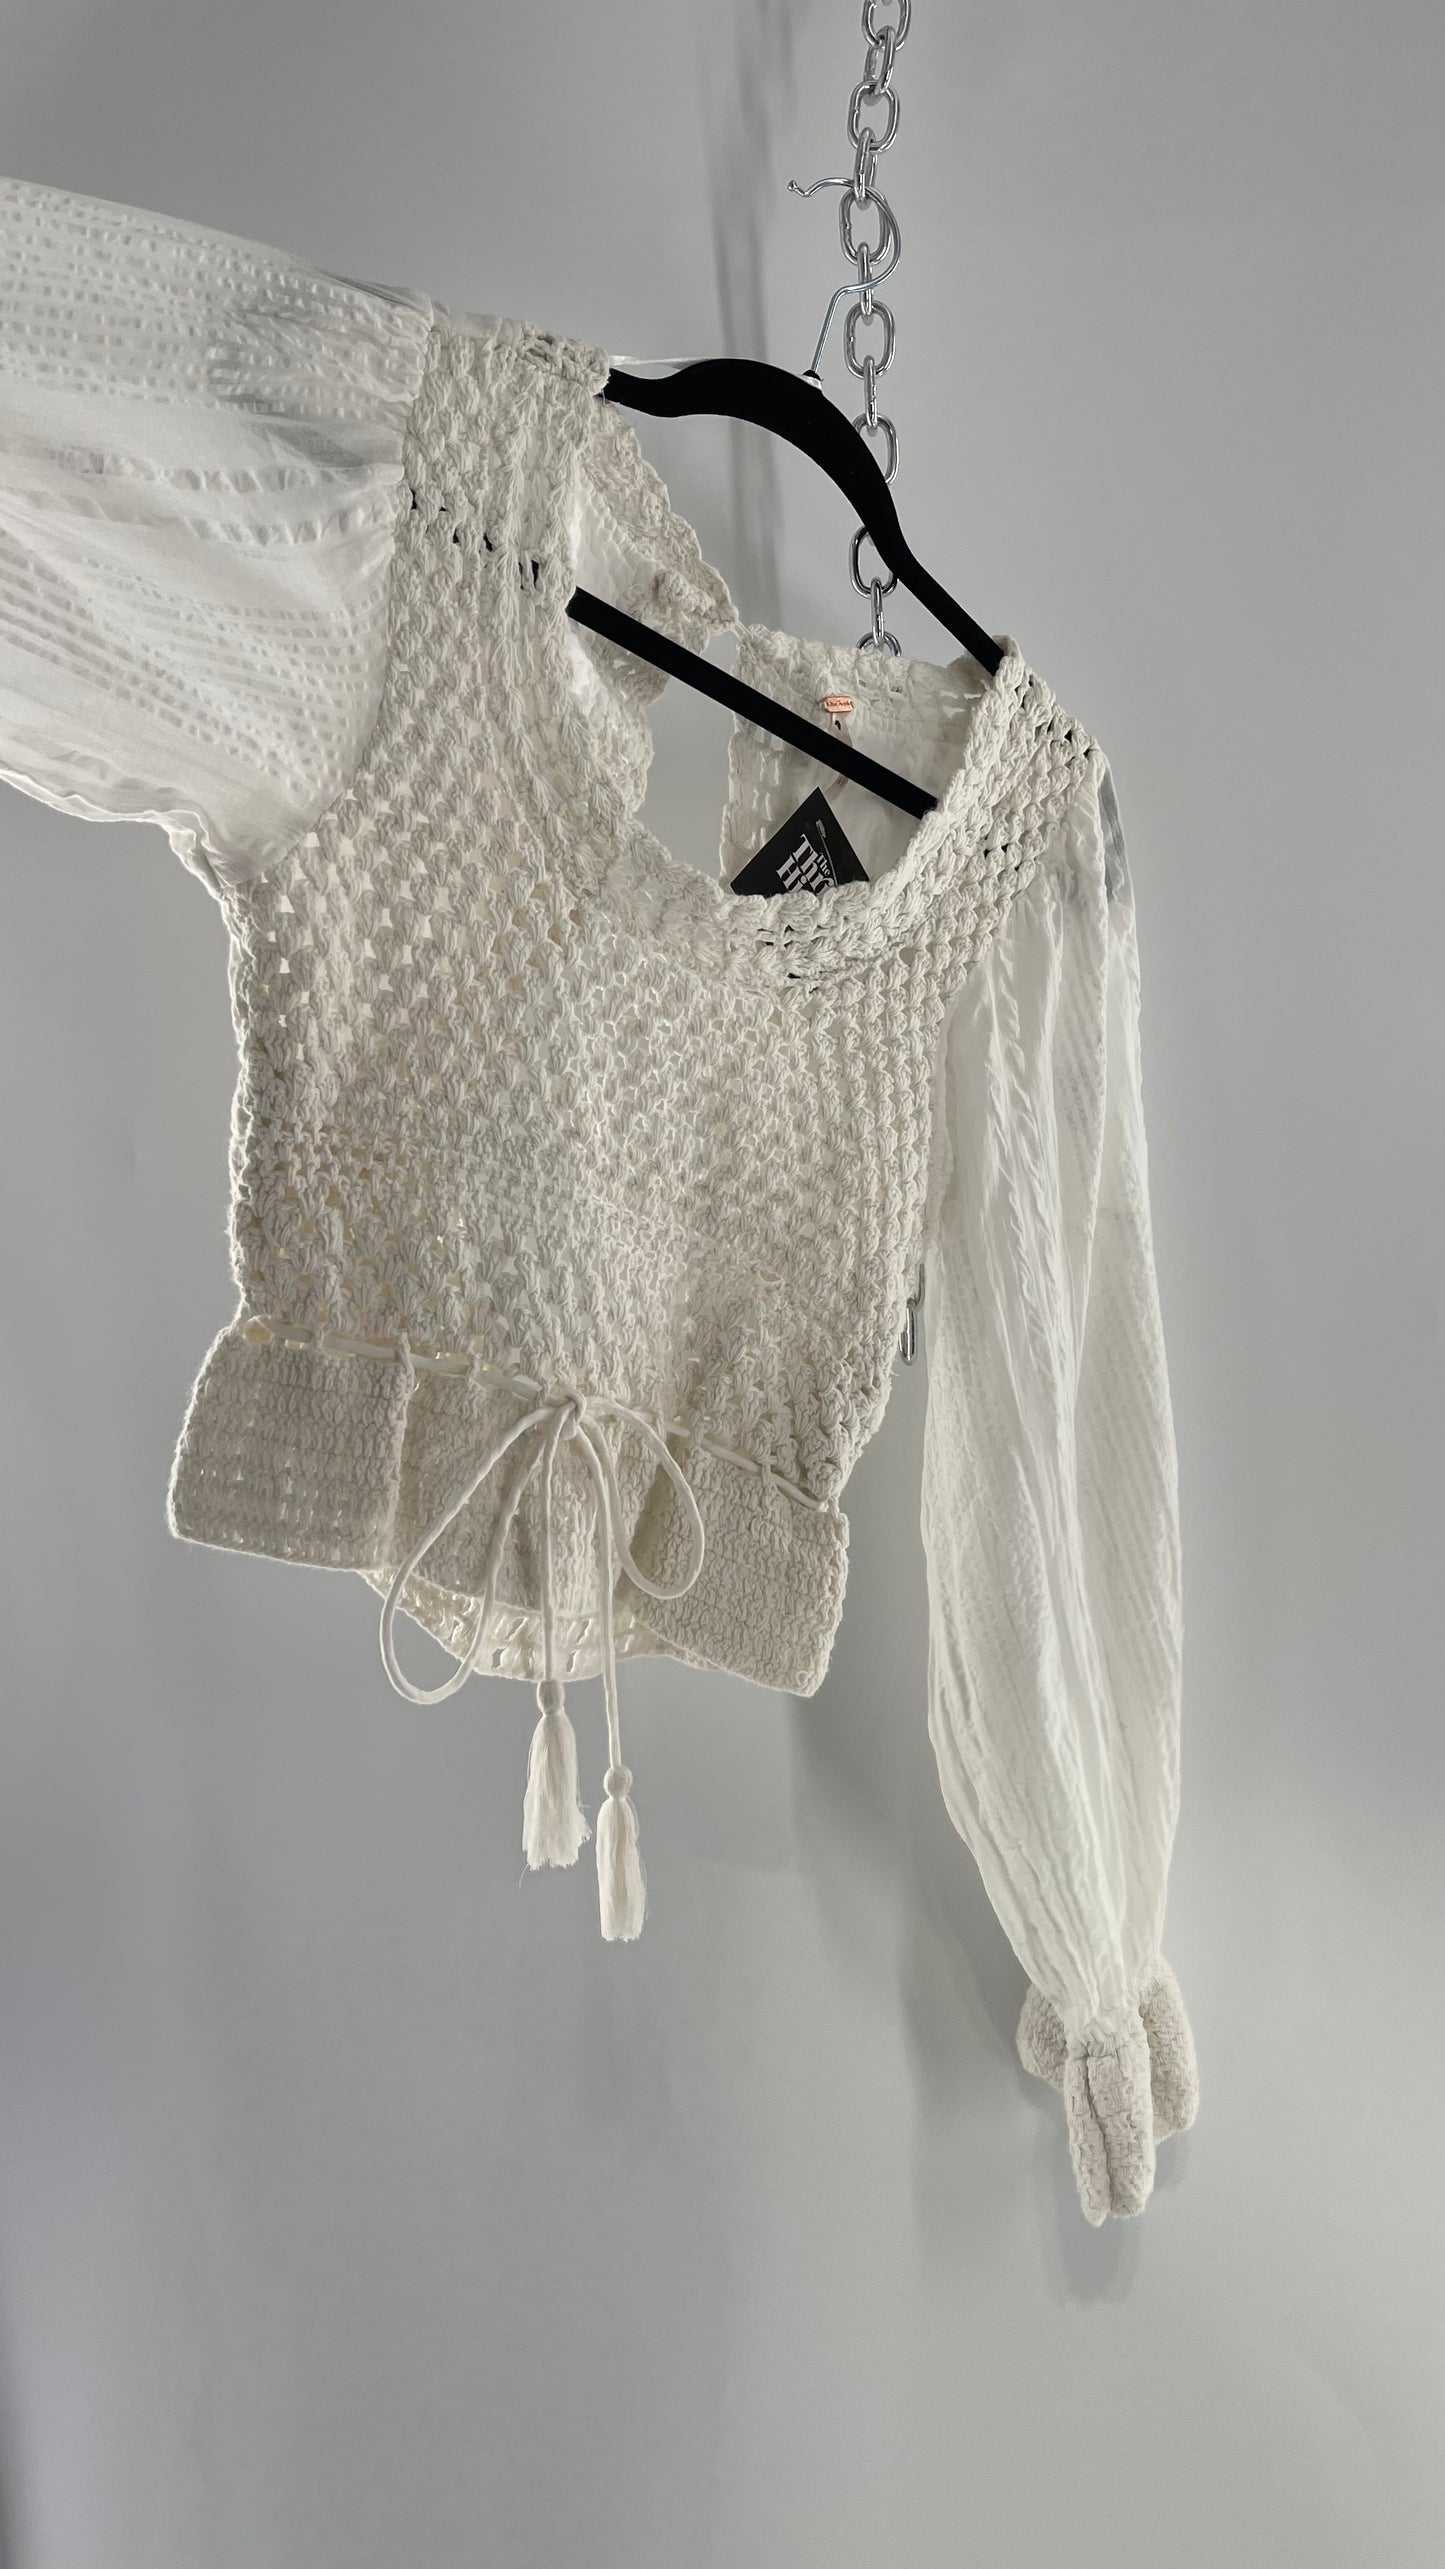 Free People White Crochet “Megan” Top (Small)